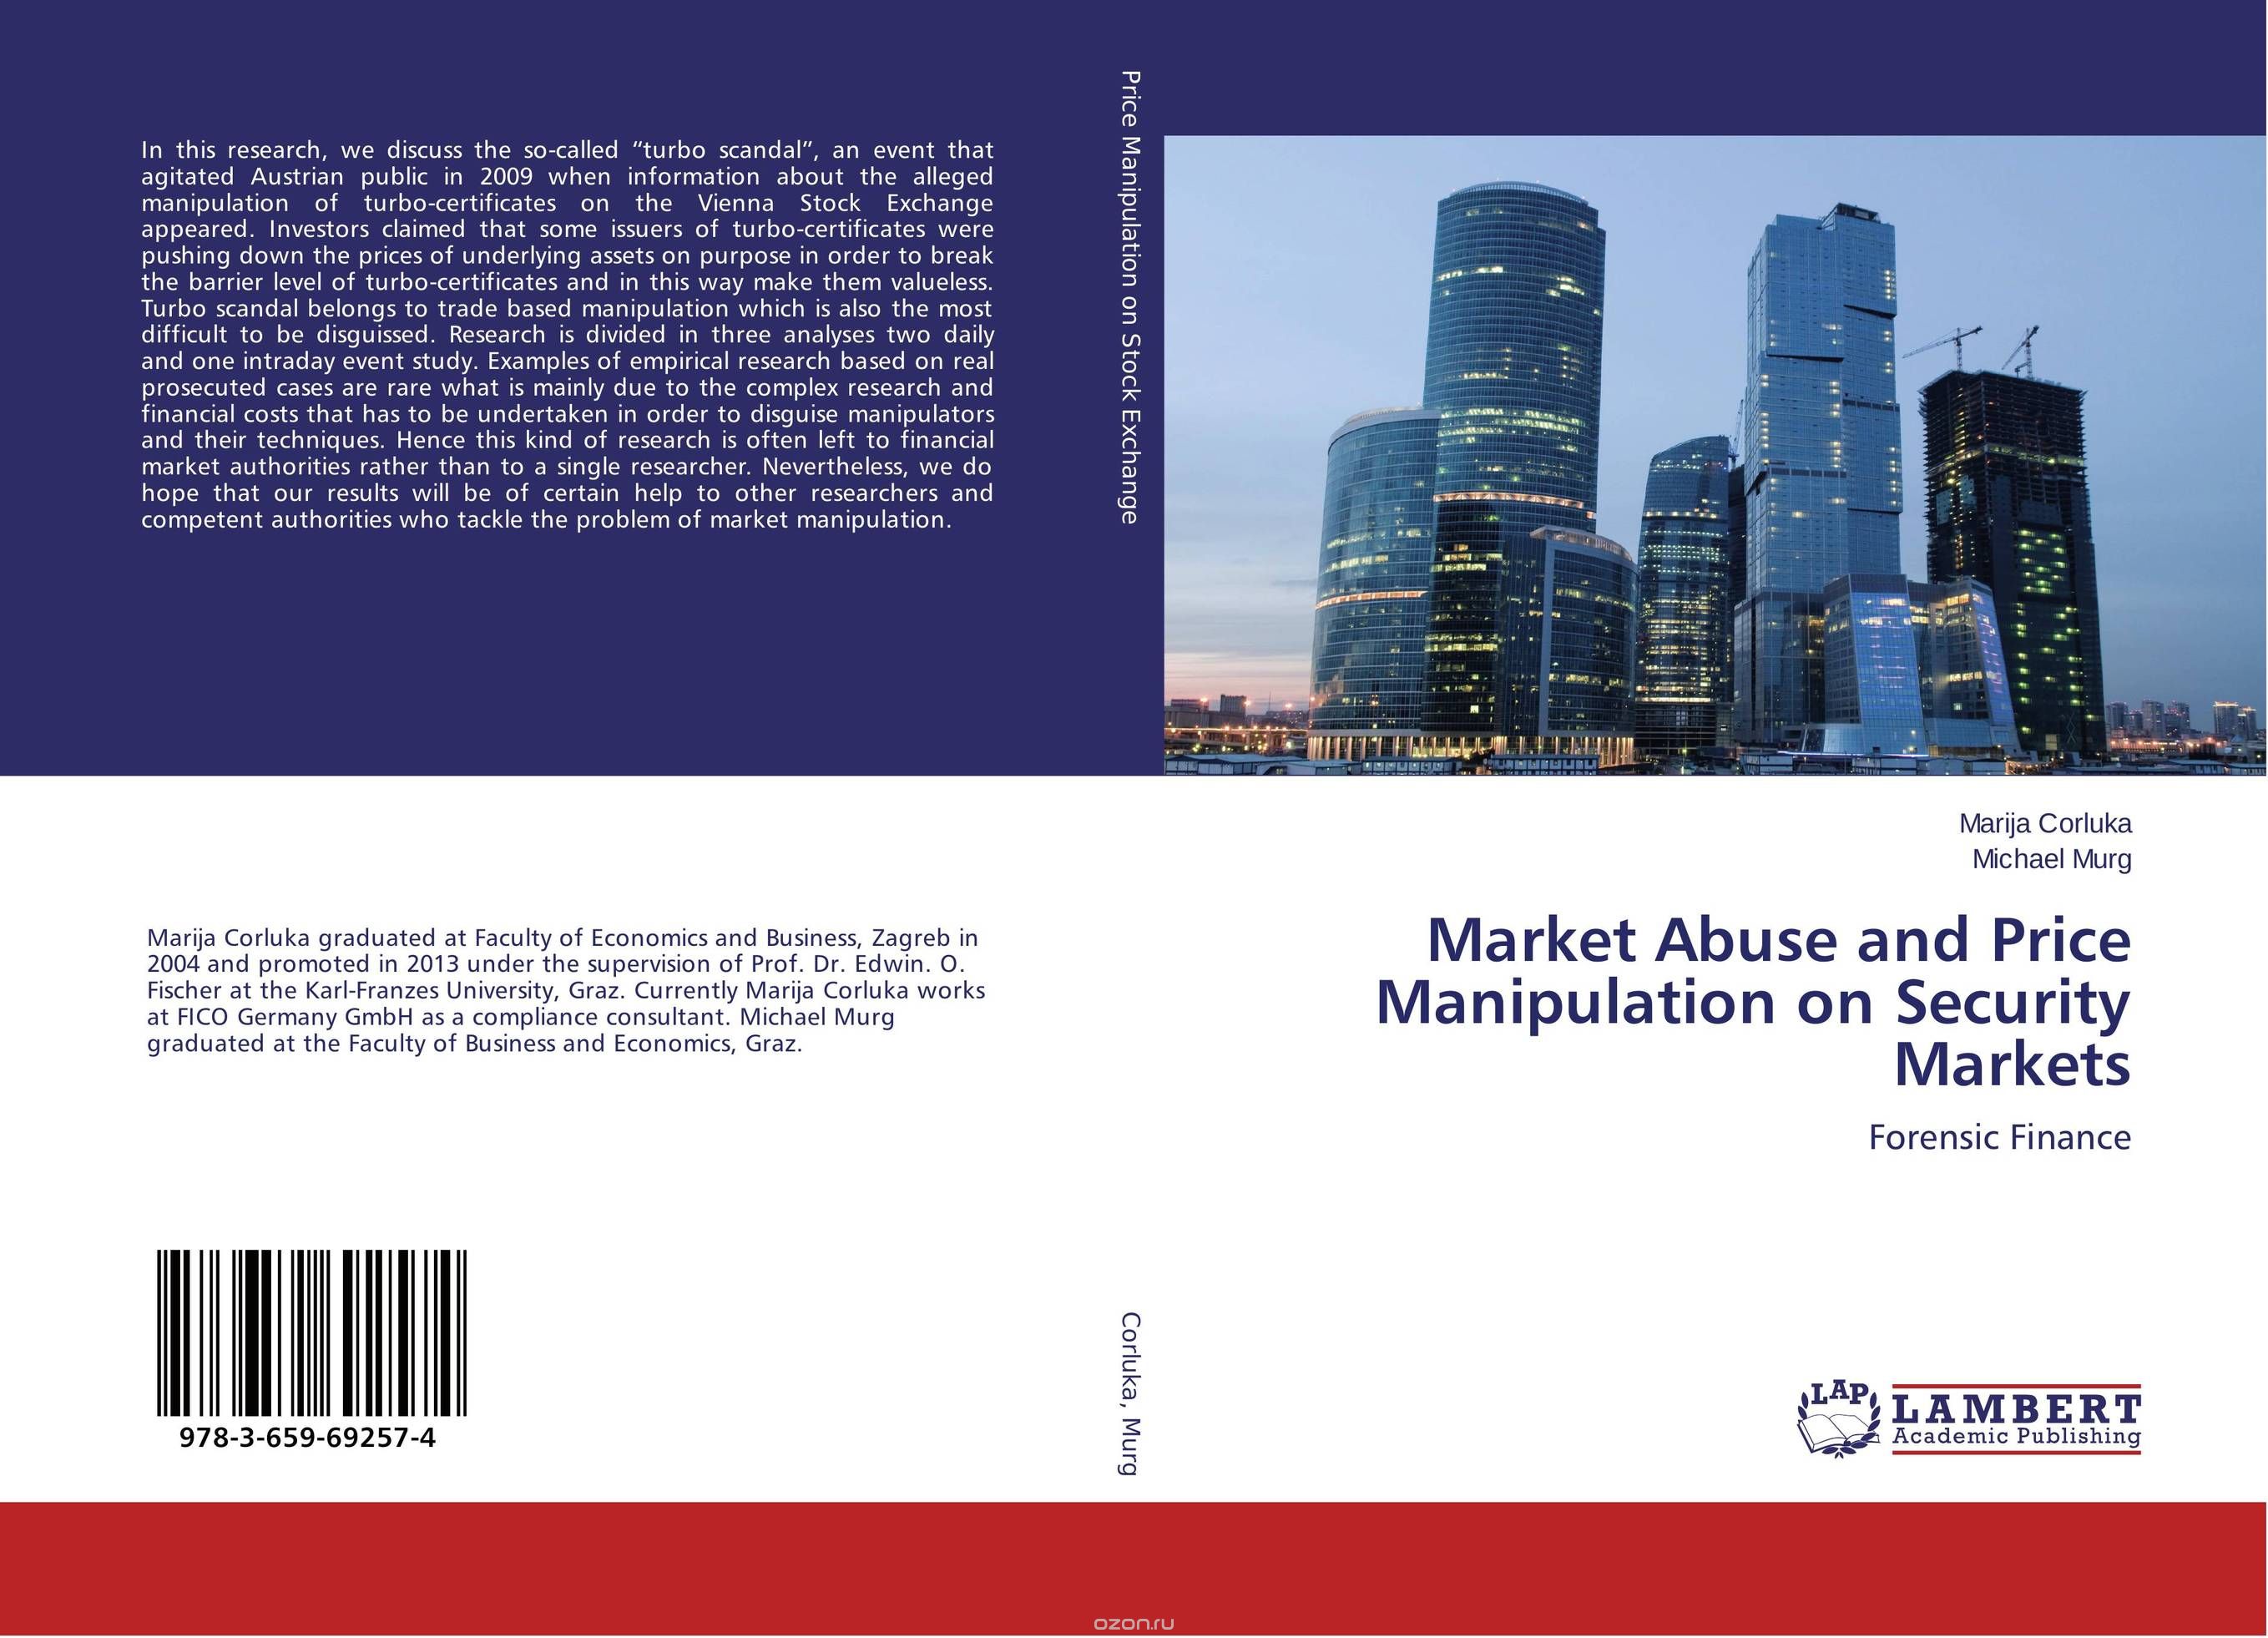 Скачать книгу "Market Abuse and Price Manipulation on Security Markets"